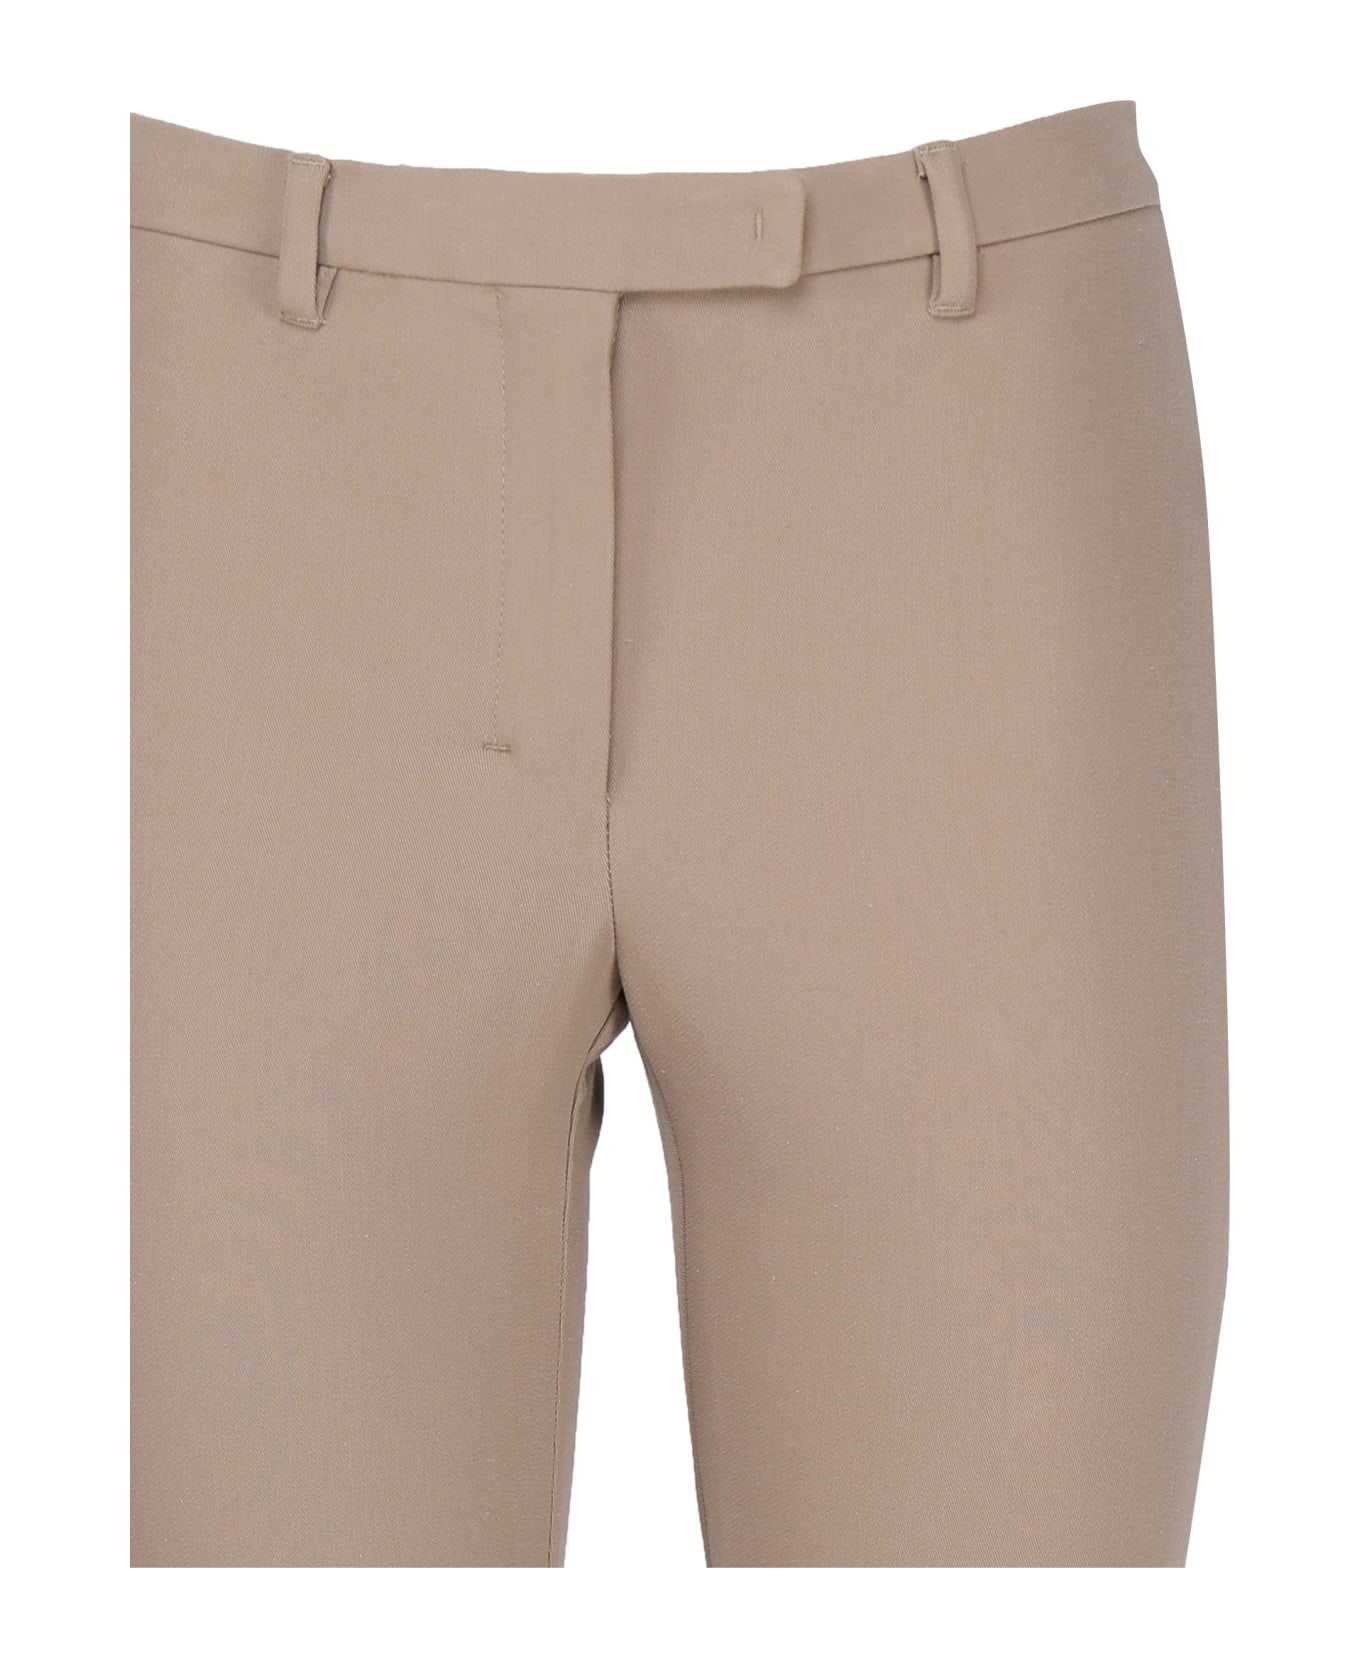 'S Max Mara Fluid Fabric Trousers - Cammello